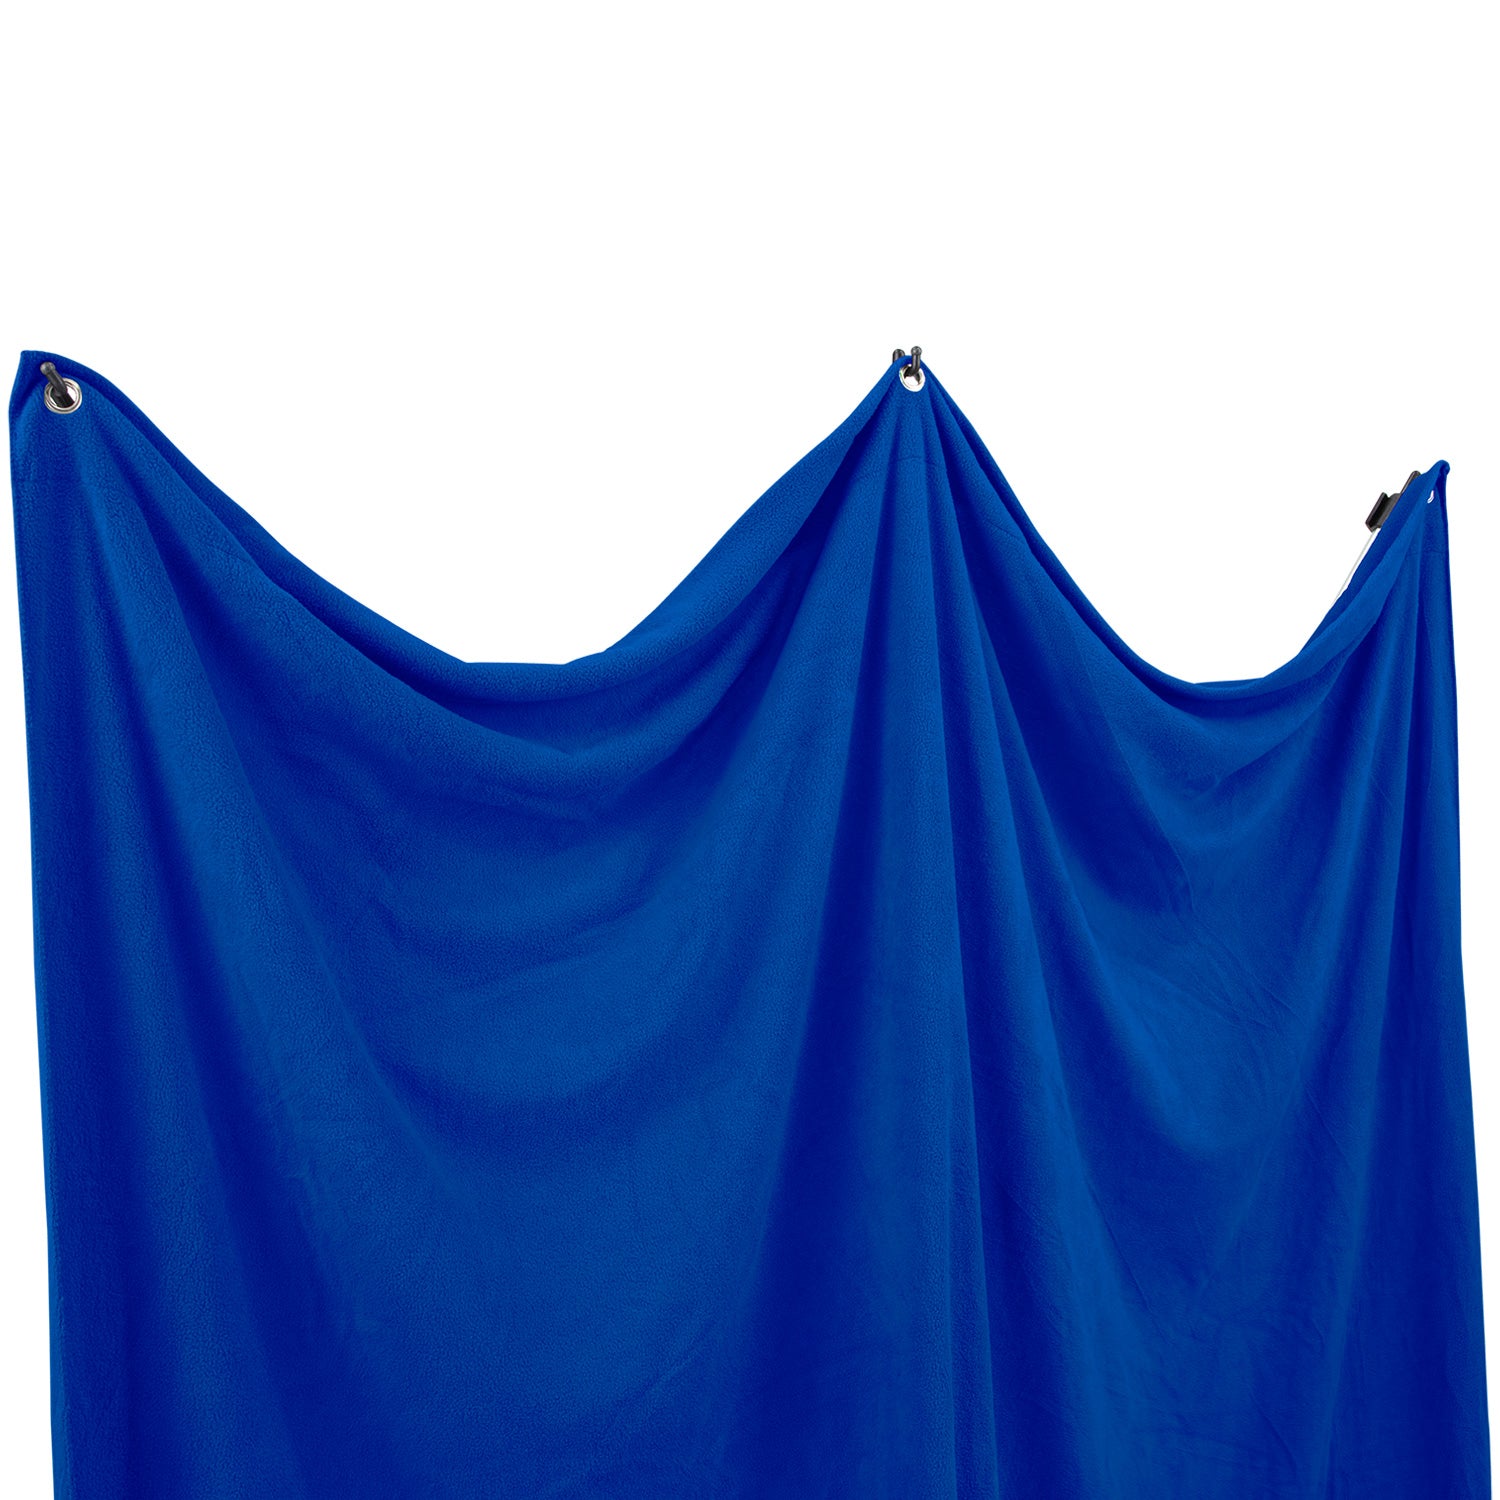 Wrinkle-Resistant Backdrop - Royal Blue / Chroma-Key Blue (8' x 8')